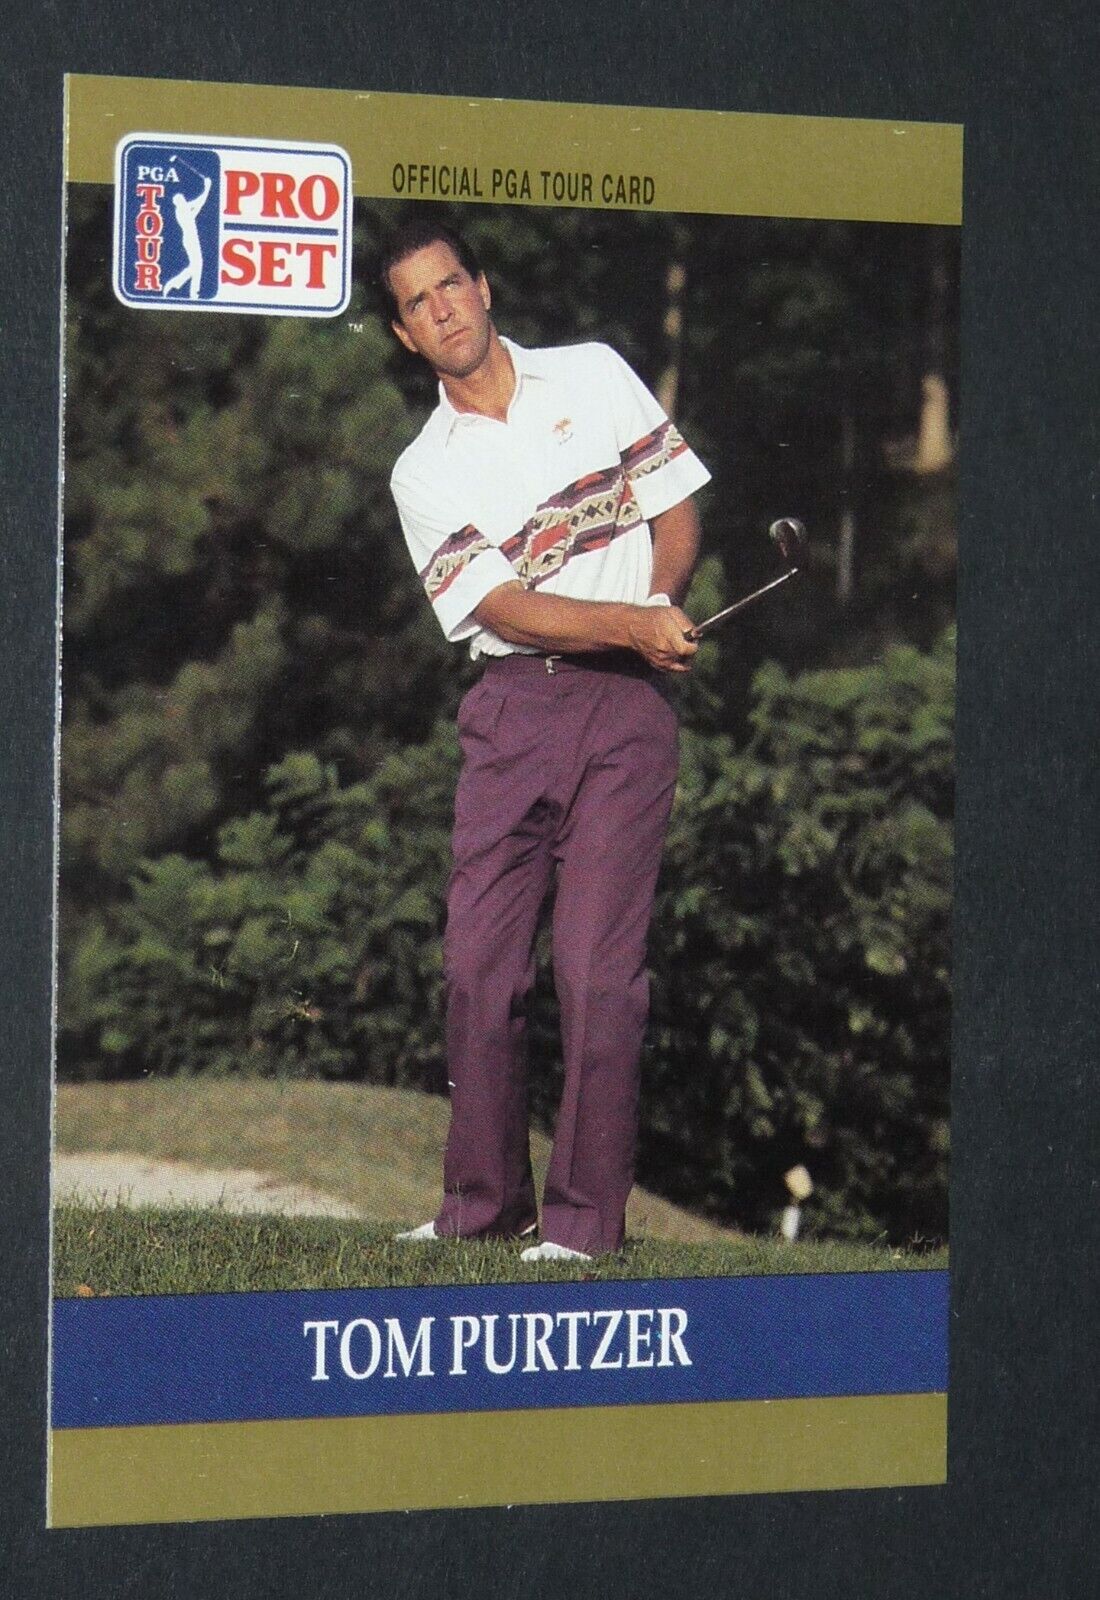 #5 TOM PURTZER USA PRO SET CARD GOLF 1990 PGA TOUR GOLFING GOLFER USPGA